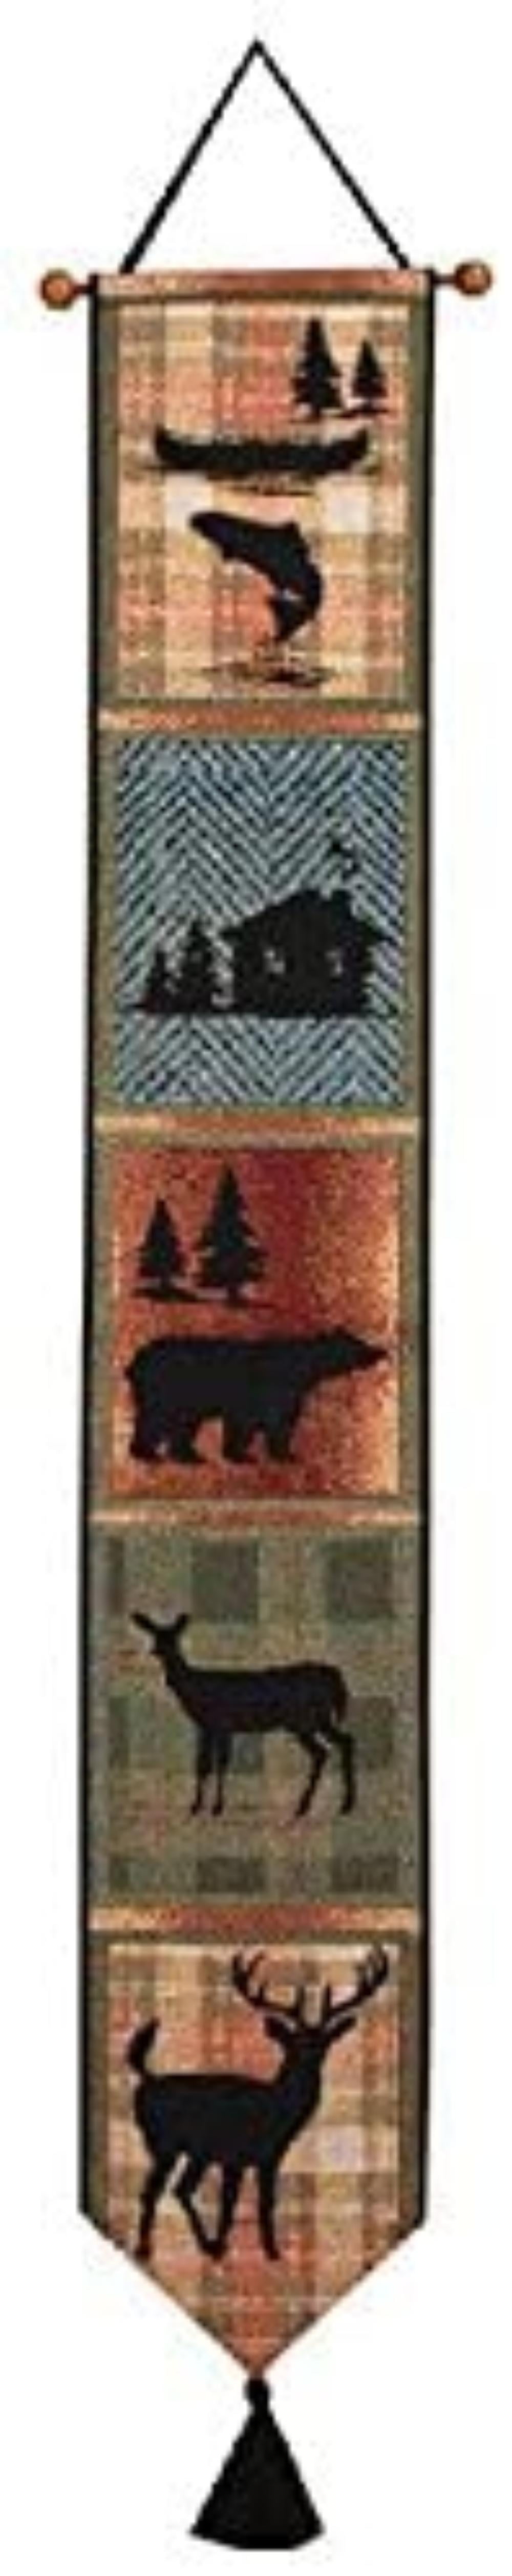 Bear Lodge Manual TBPBLD Woodworkers & Weavers Tapestry Bell Pull